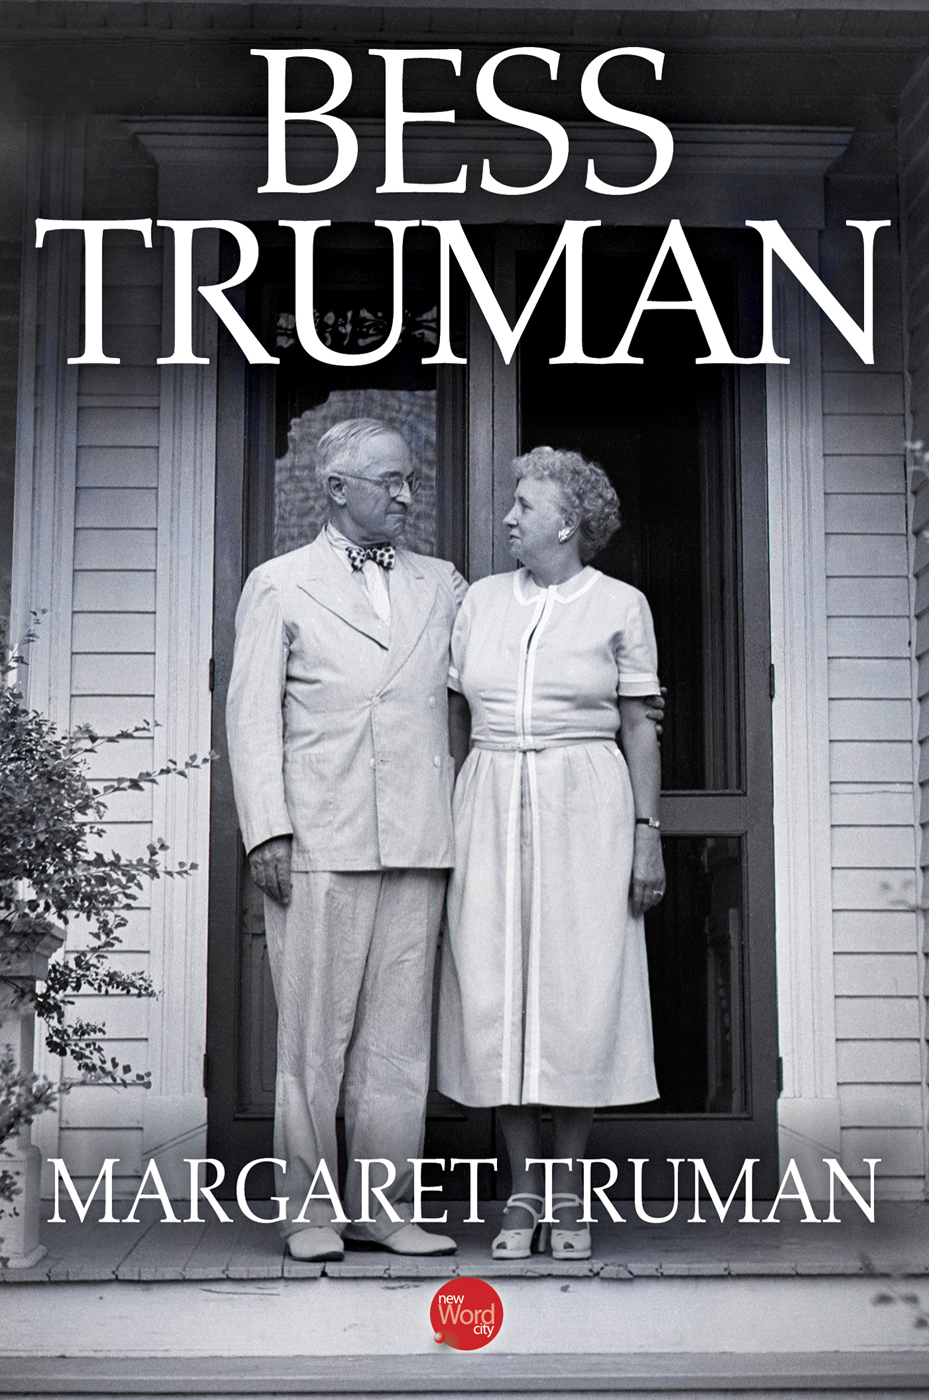 Bess Truman (2014) by Margaret Truman